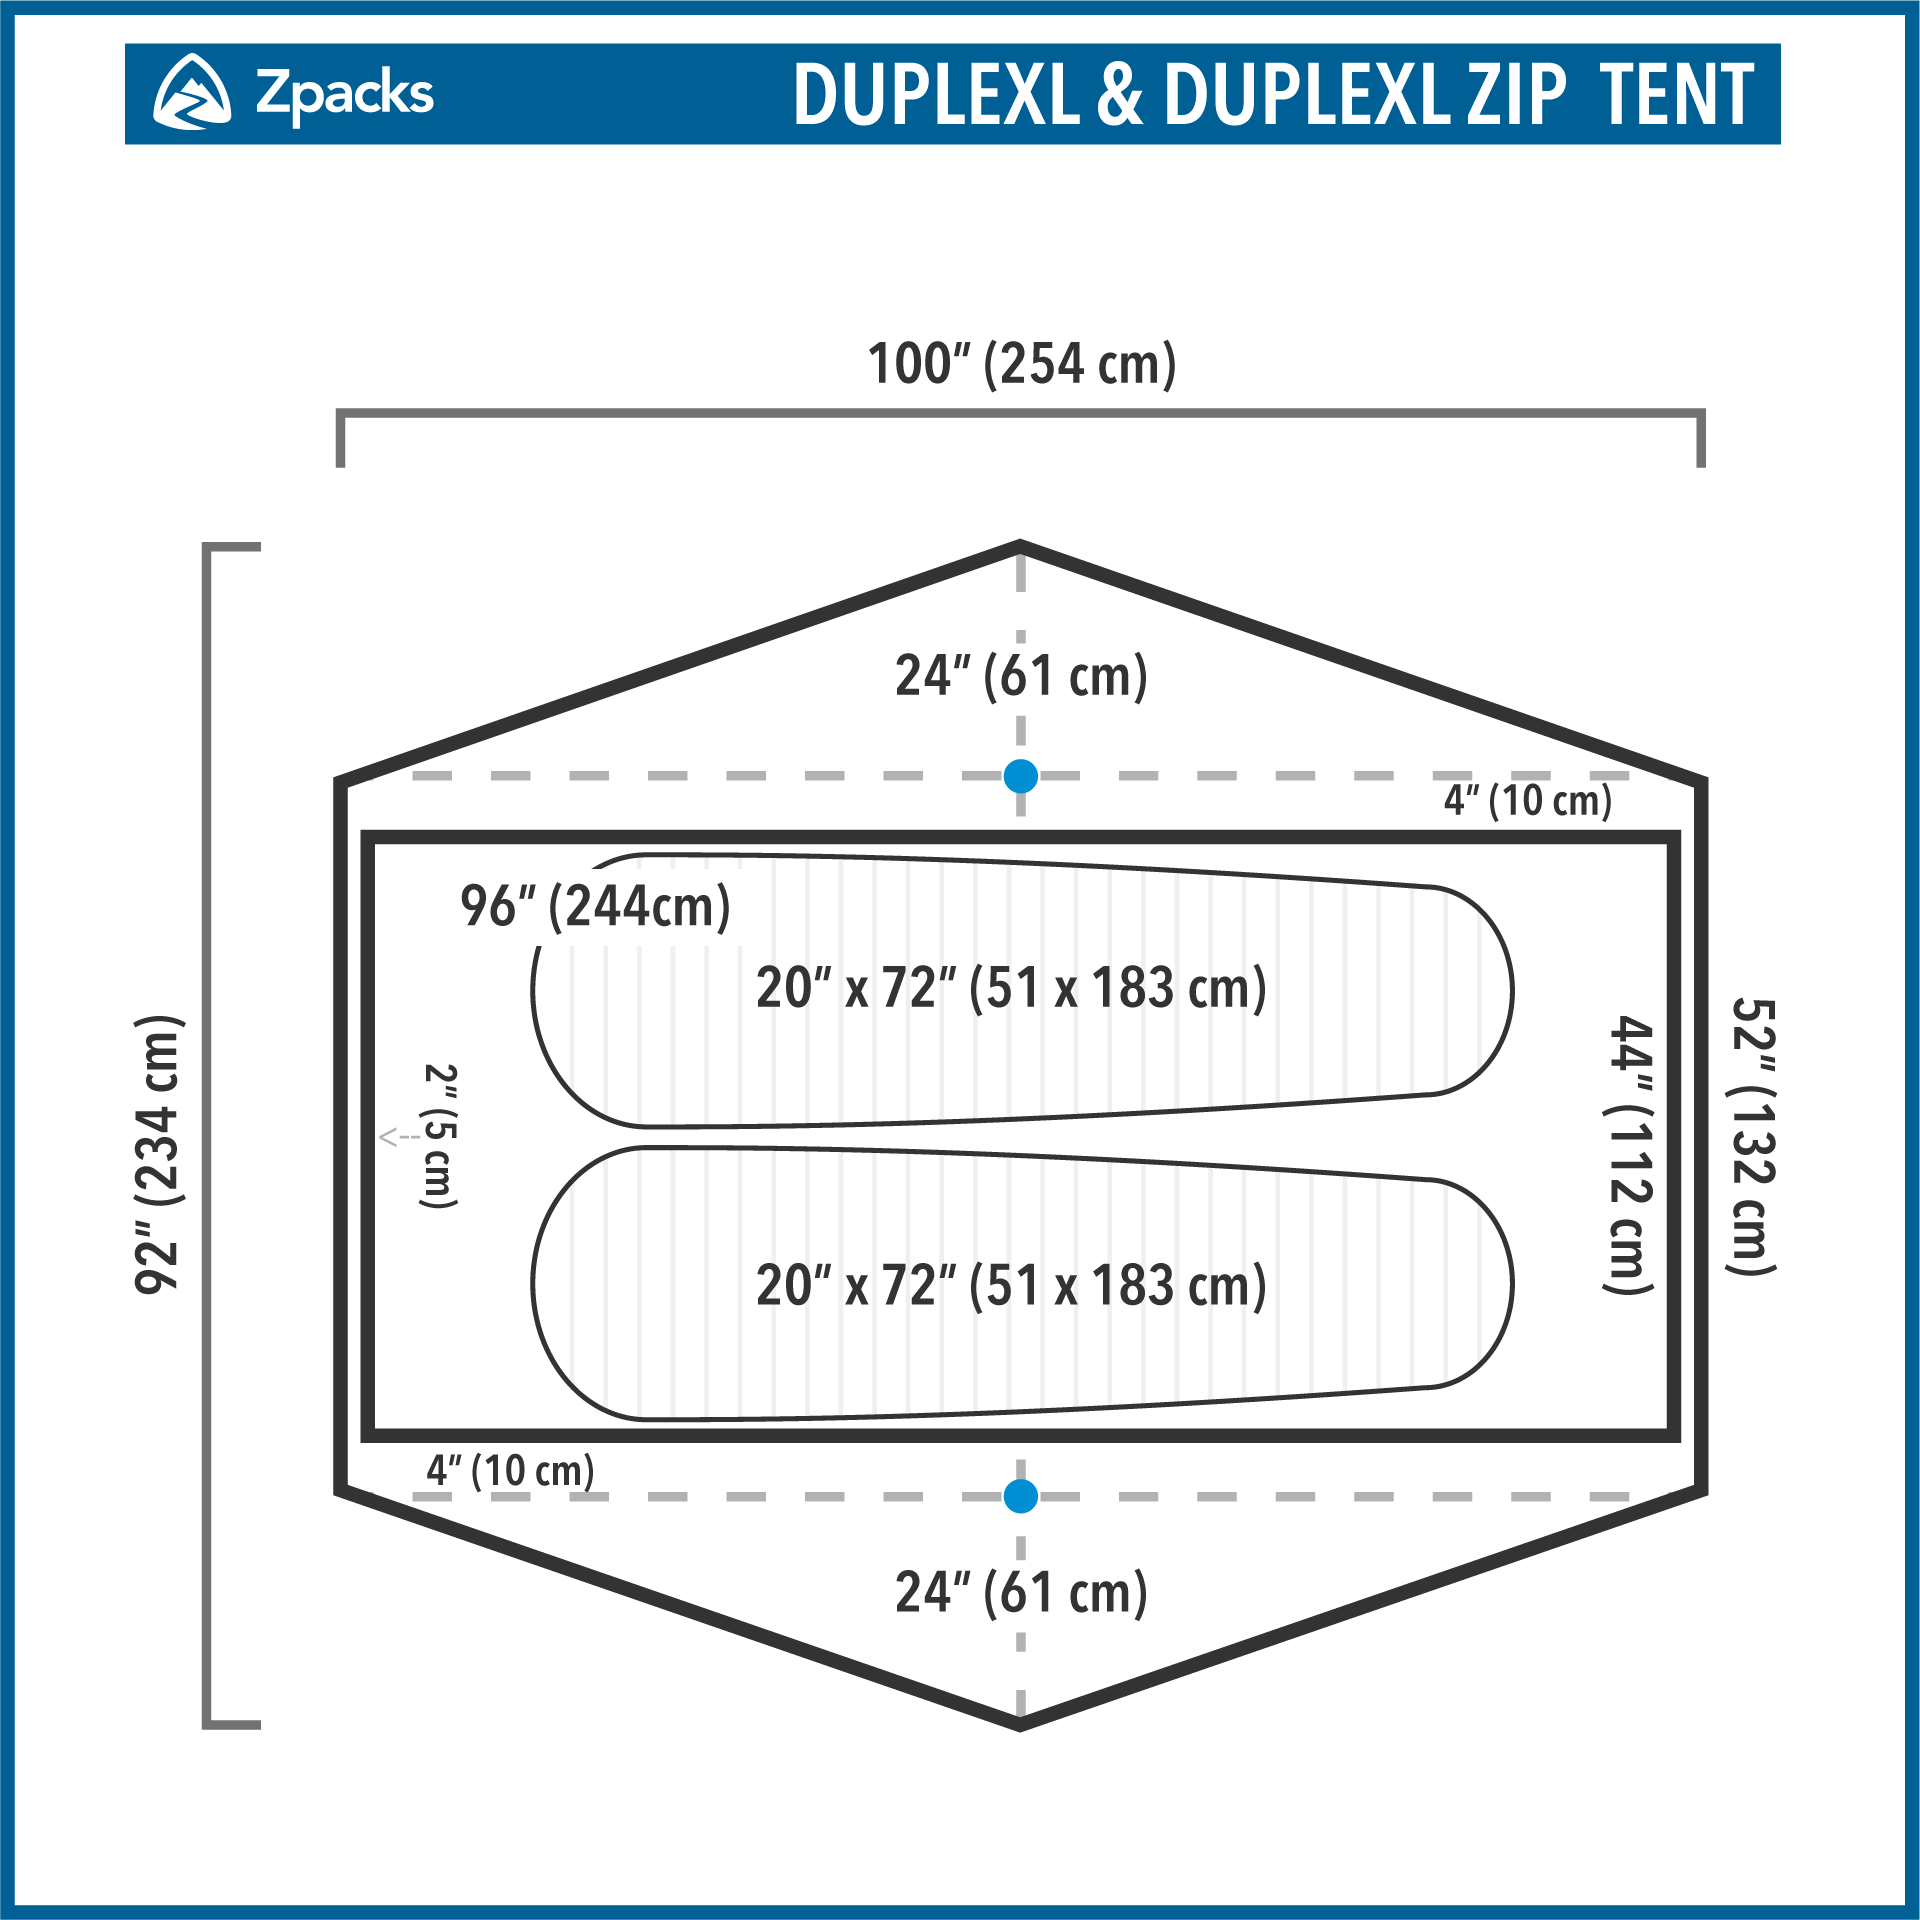 DupleXL Zip Tent - Large 2P UL Backpacking Shelter | Zpacks